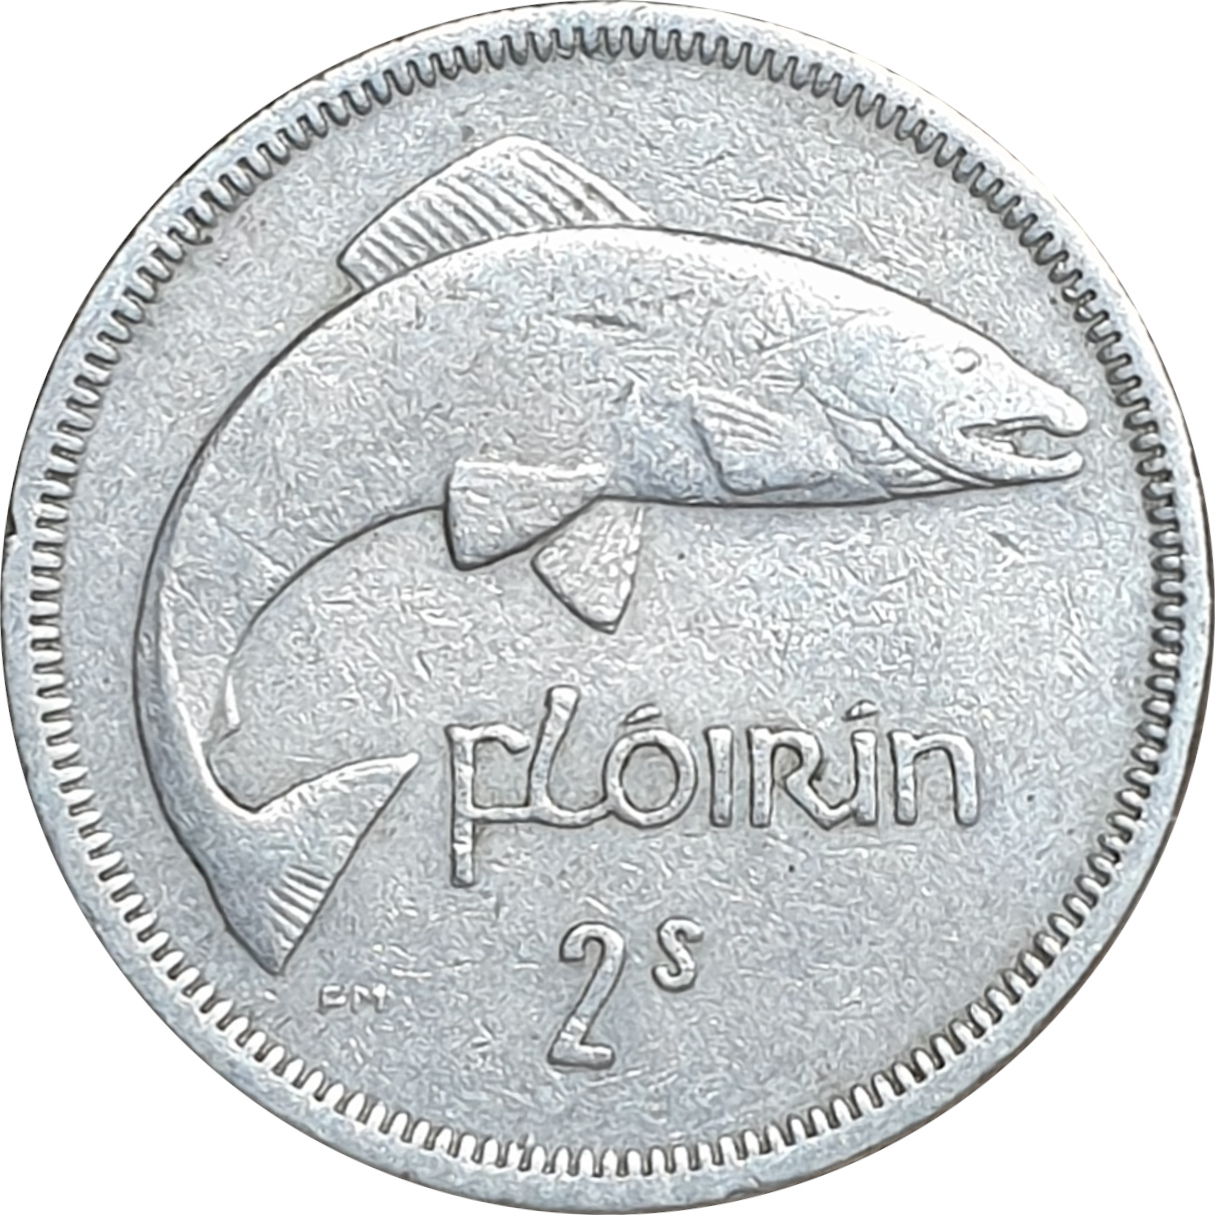 1 florin - EIRE